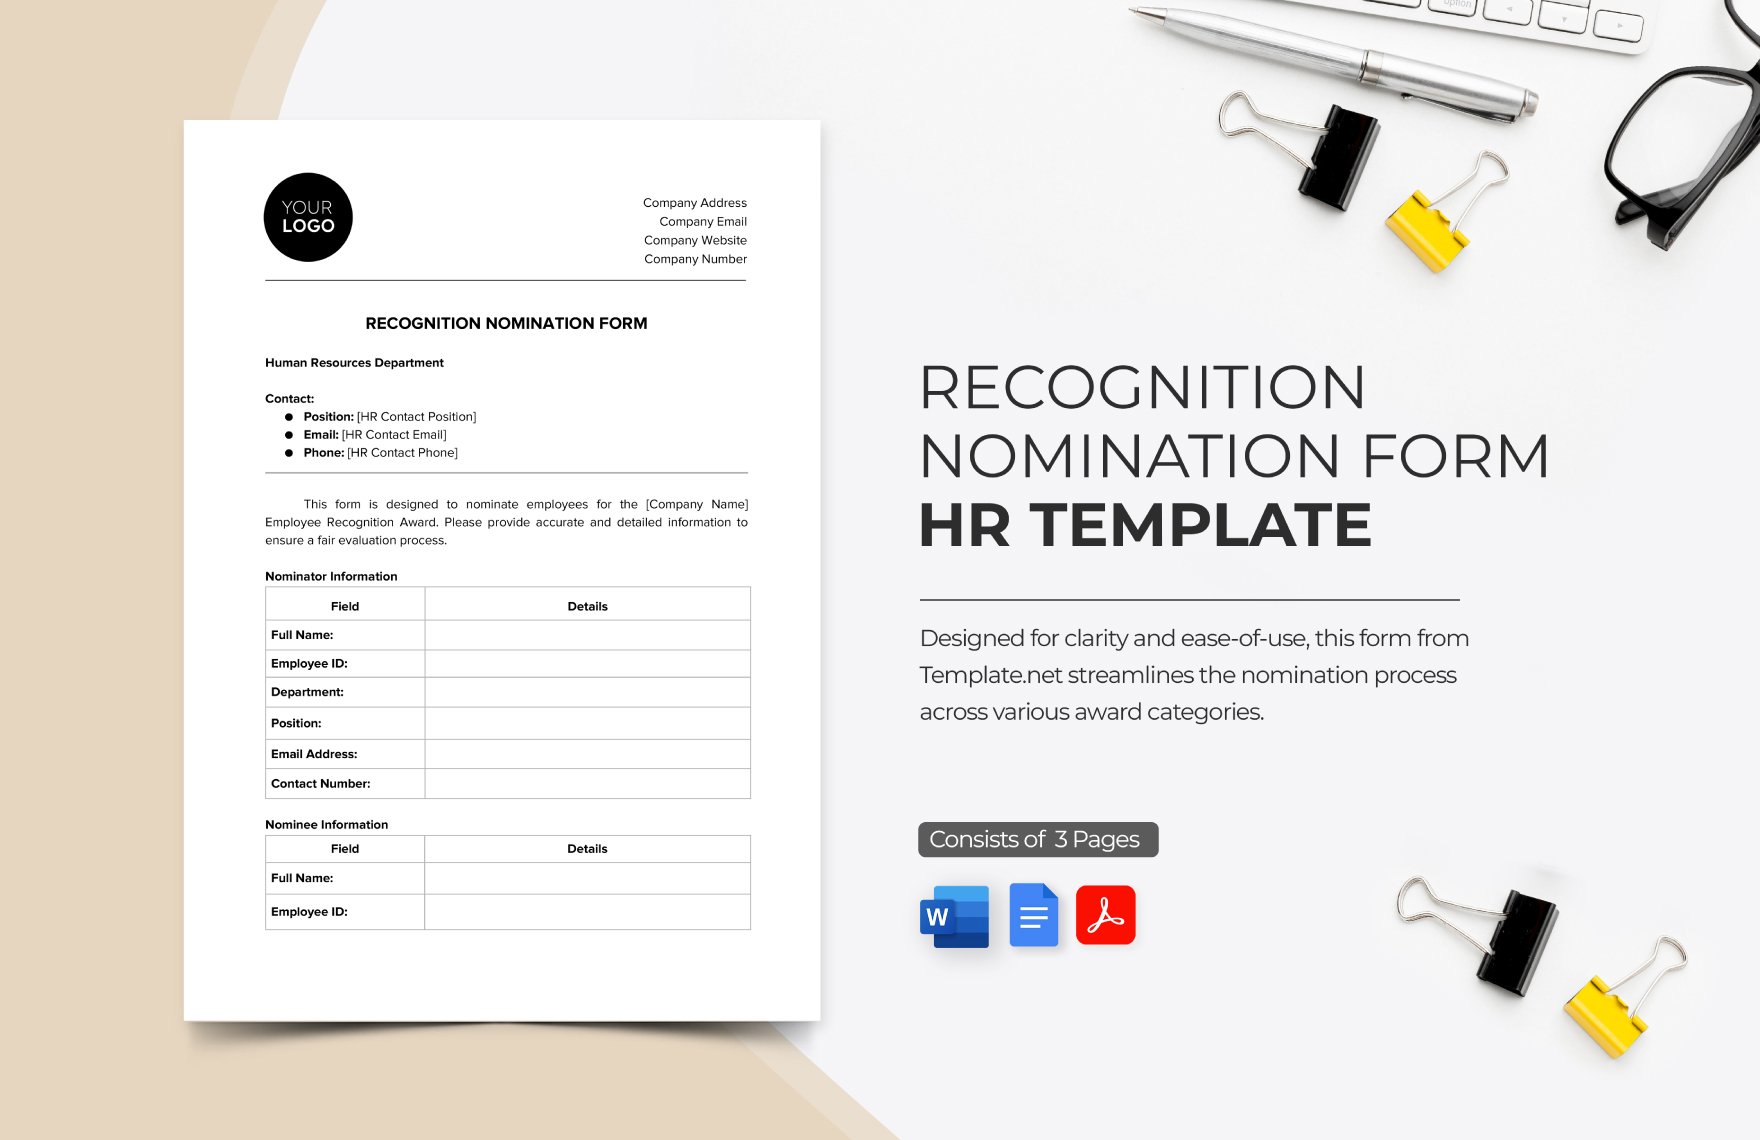 Recognition Nomination Form HR Template